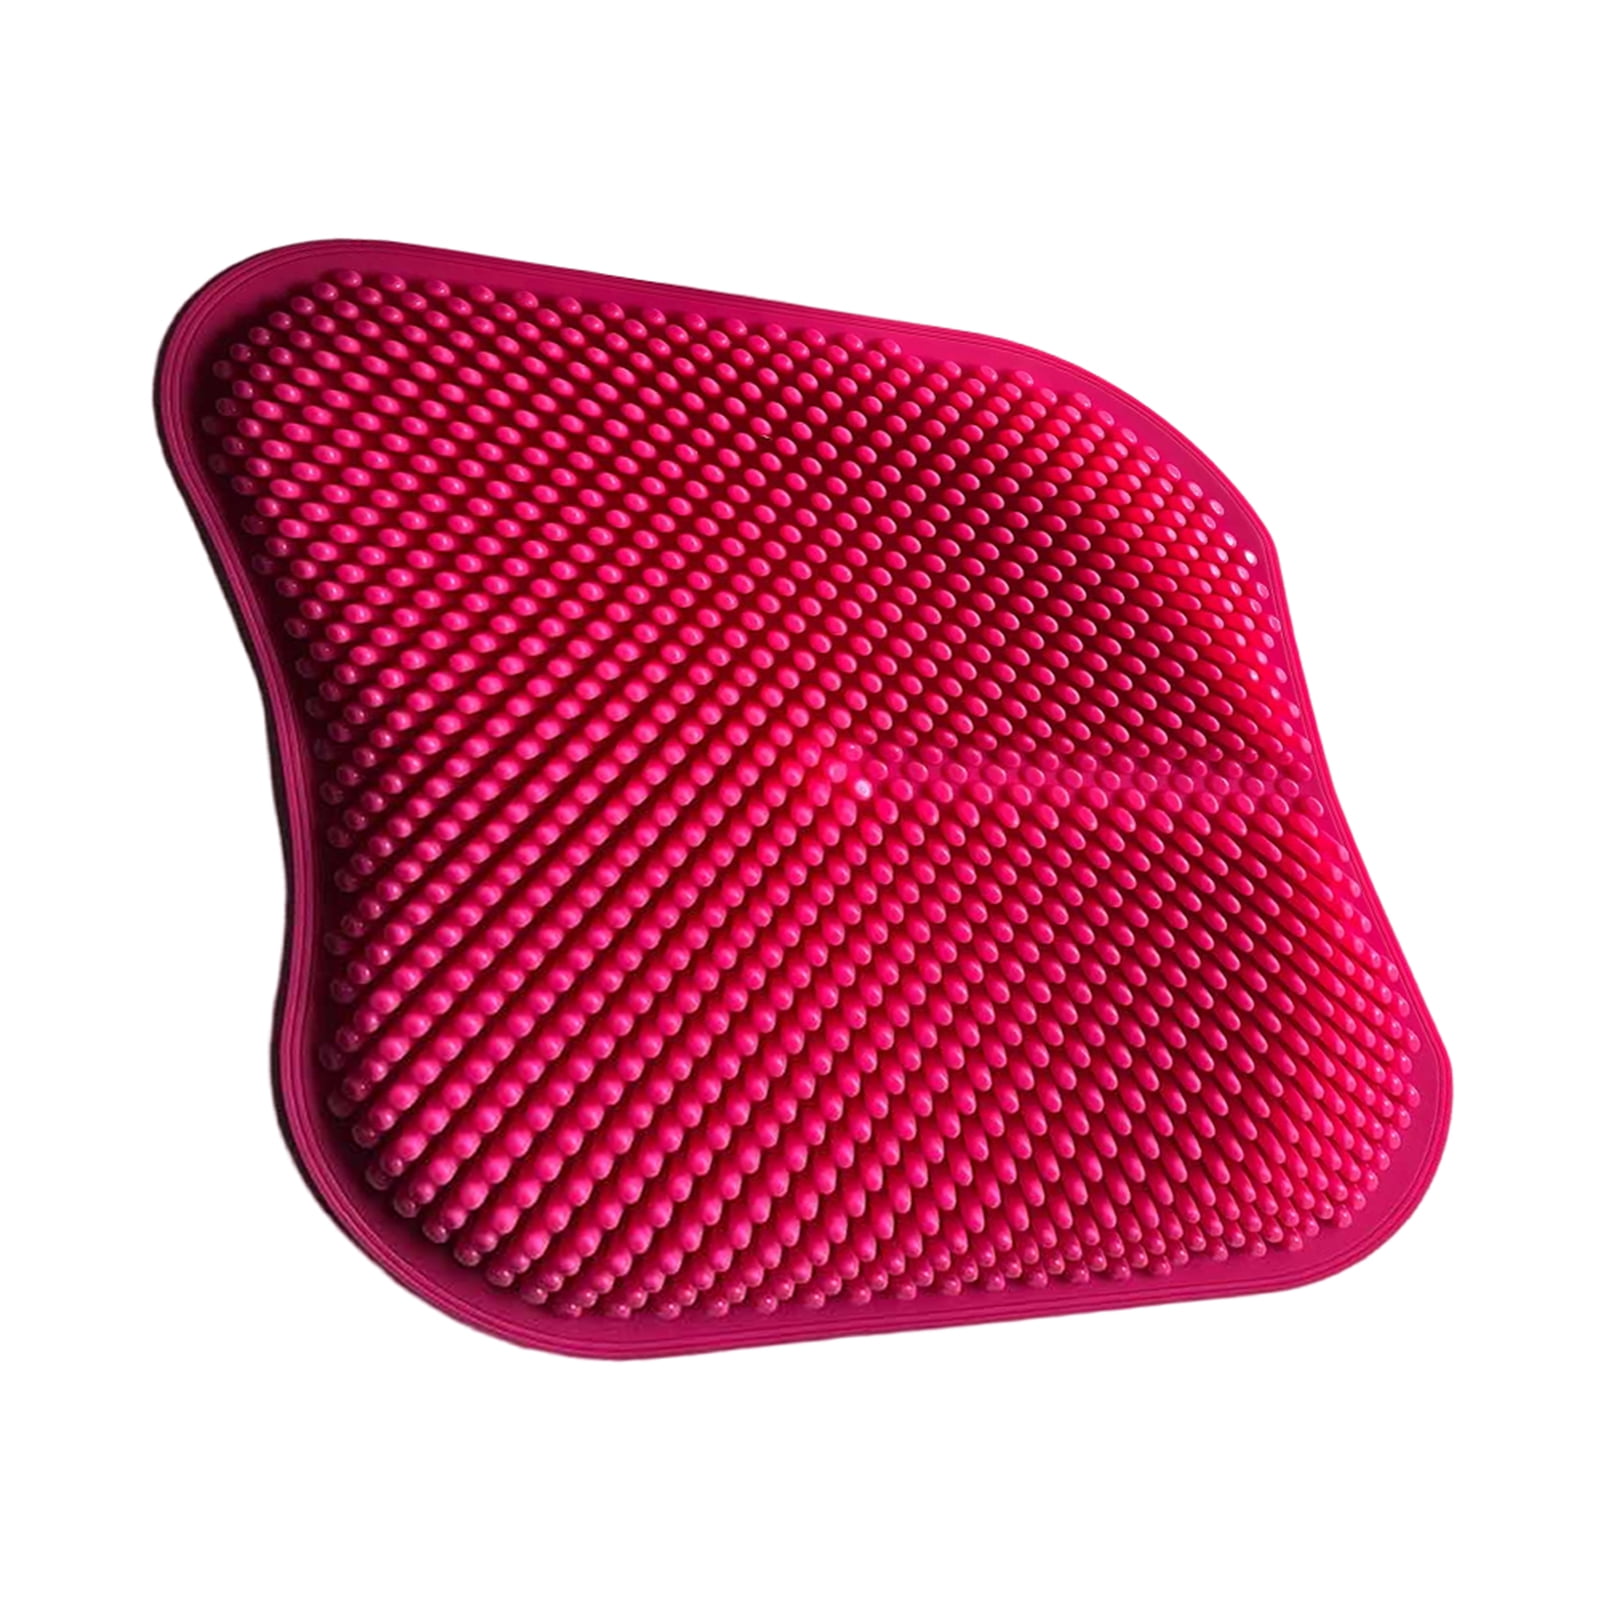 Fairnull 3D Silicone Car Seat Cover Breathable Non Slip Elastic